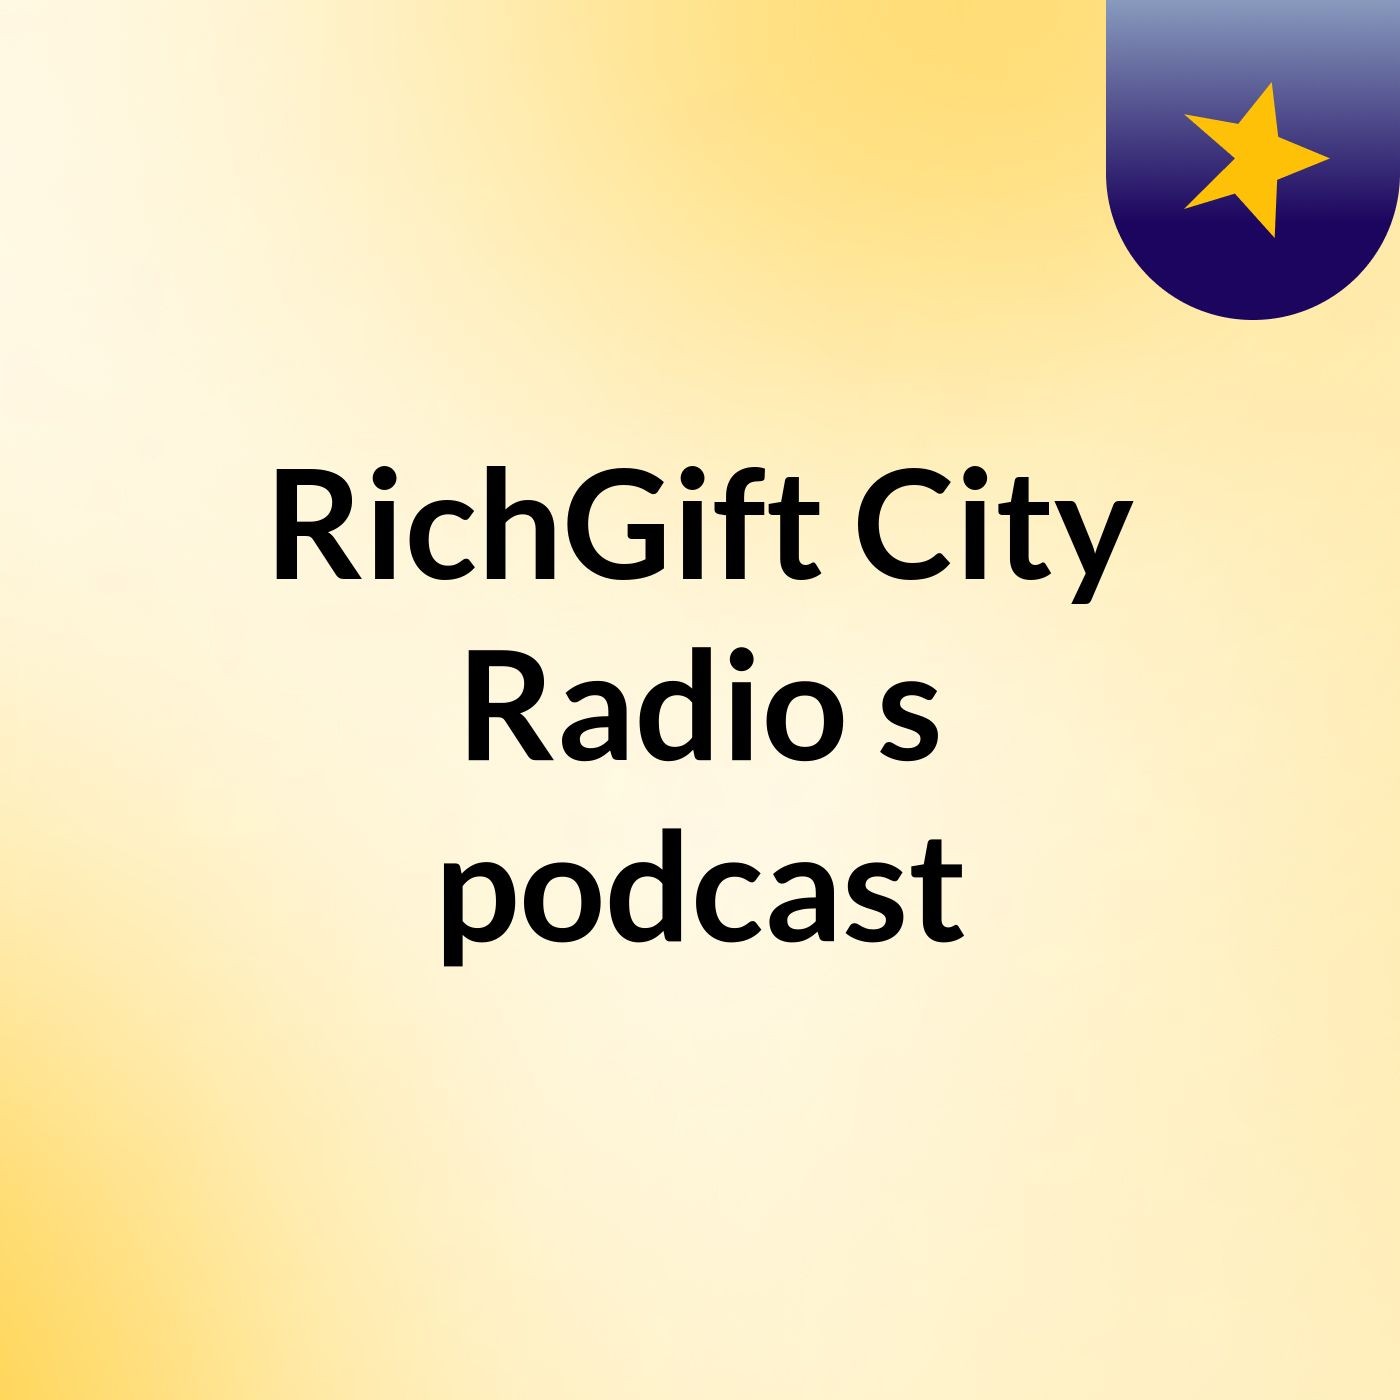 RichGift City Radio's podcast